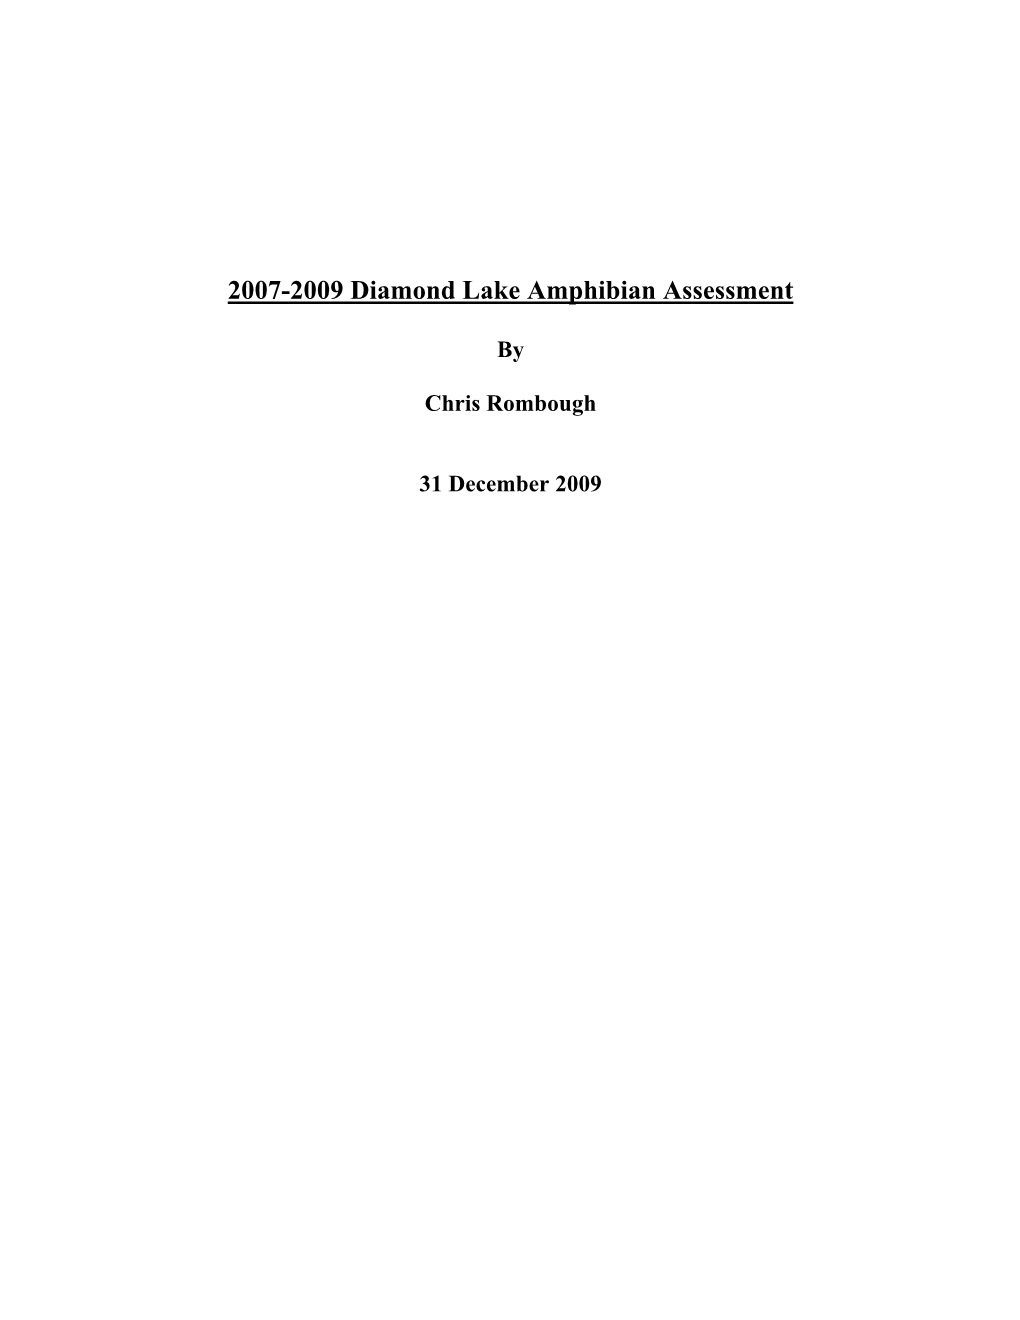 Report on Diamond Lake Post-Rotenone Amphibian Assessment, 2007-2009